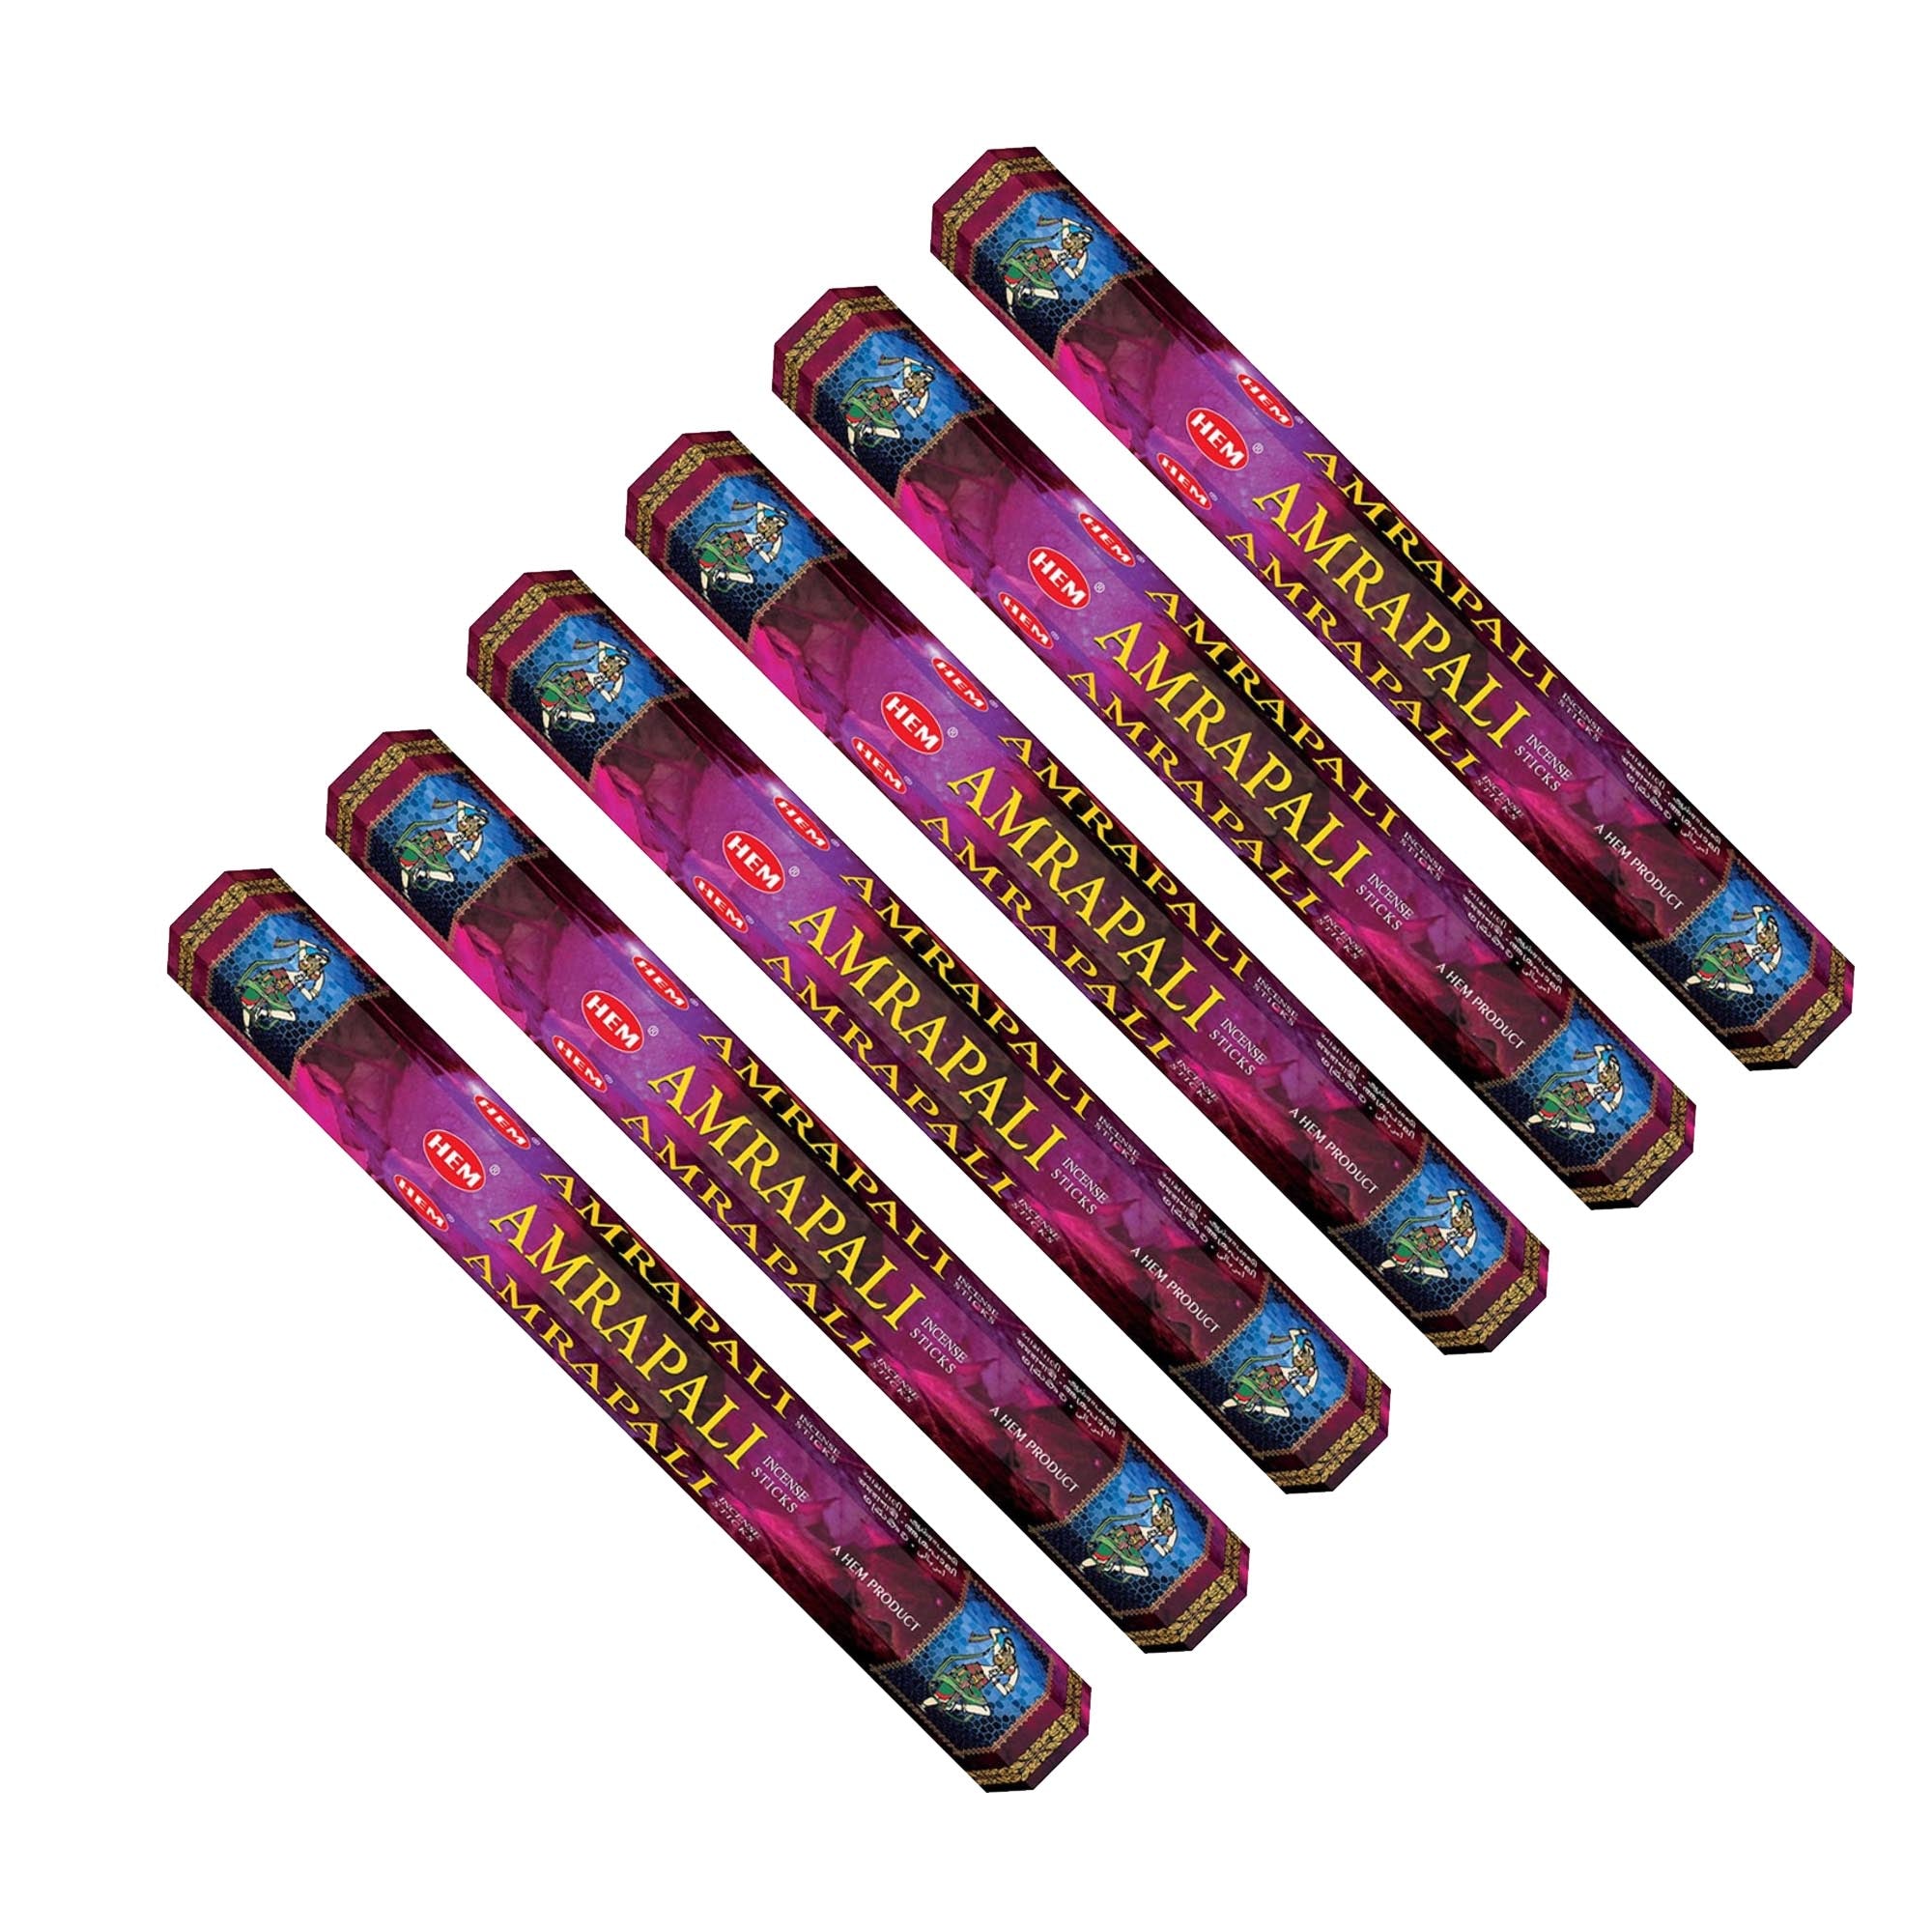 HEM - Hexagon - Amrapali Incense Sticks